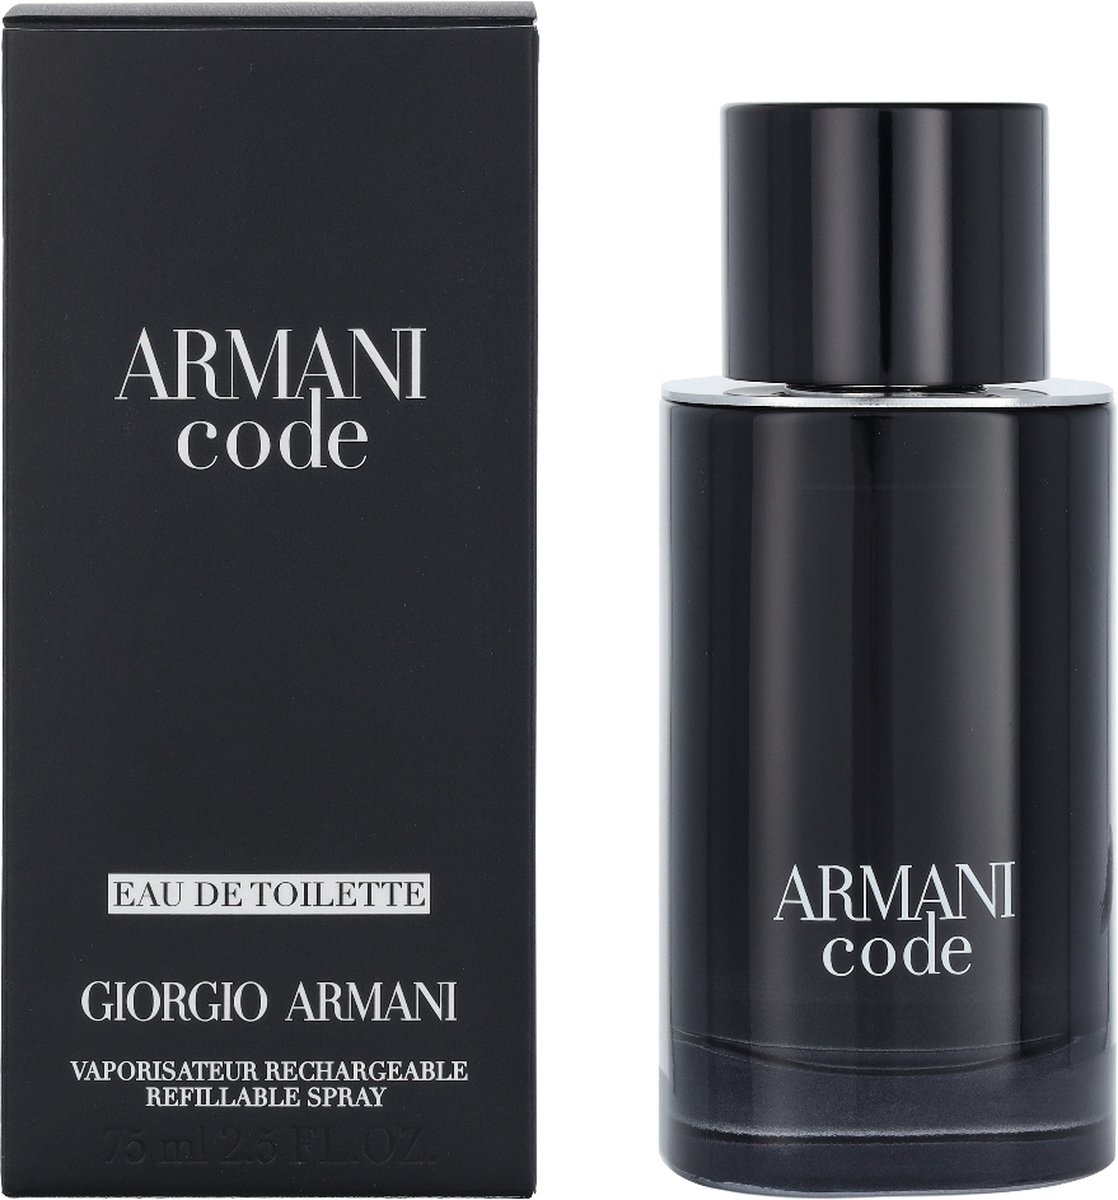 Giorgio Armani Code Homme Refillable Eau de toilette spray 75 ml - Packaging damaged